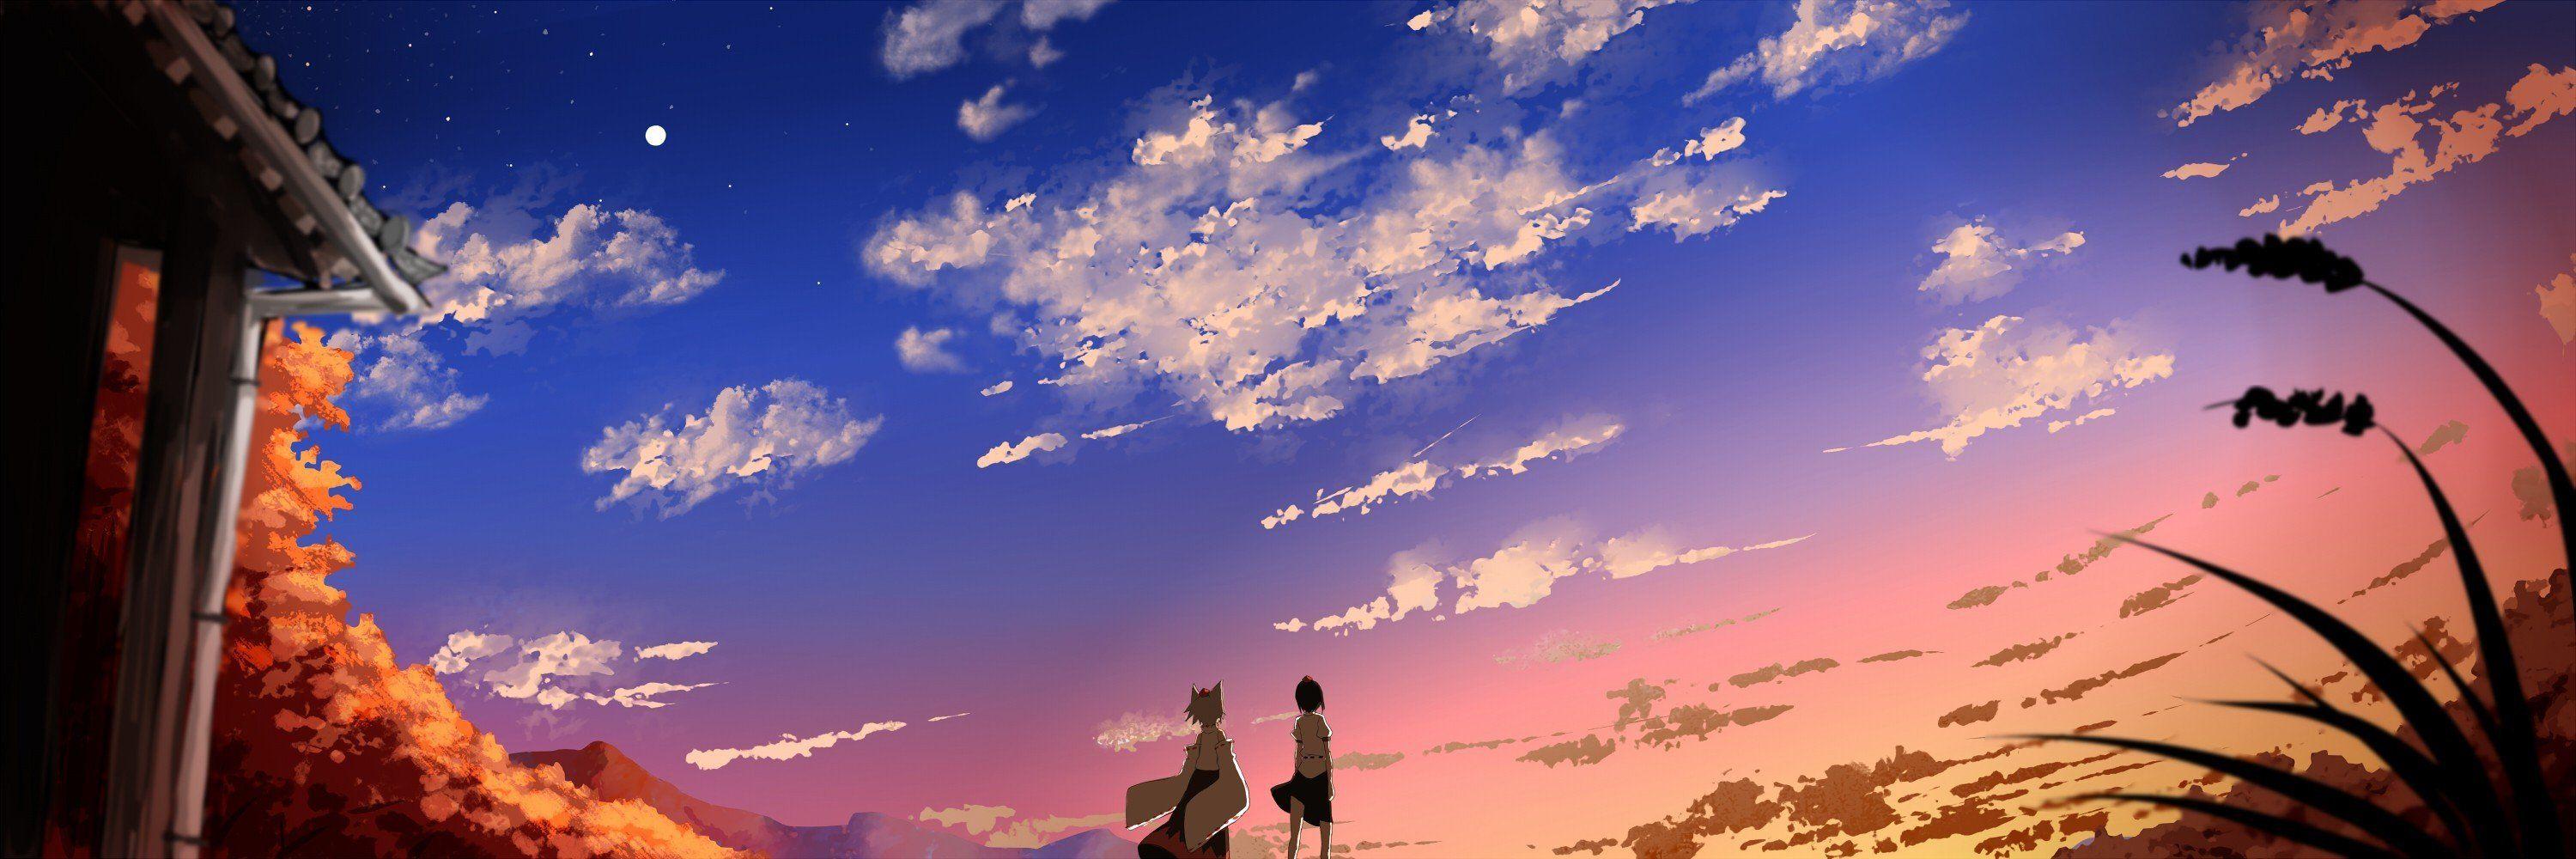 Clouds Skies Sunset Fantasy Art